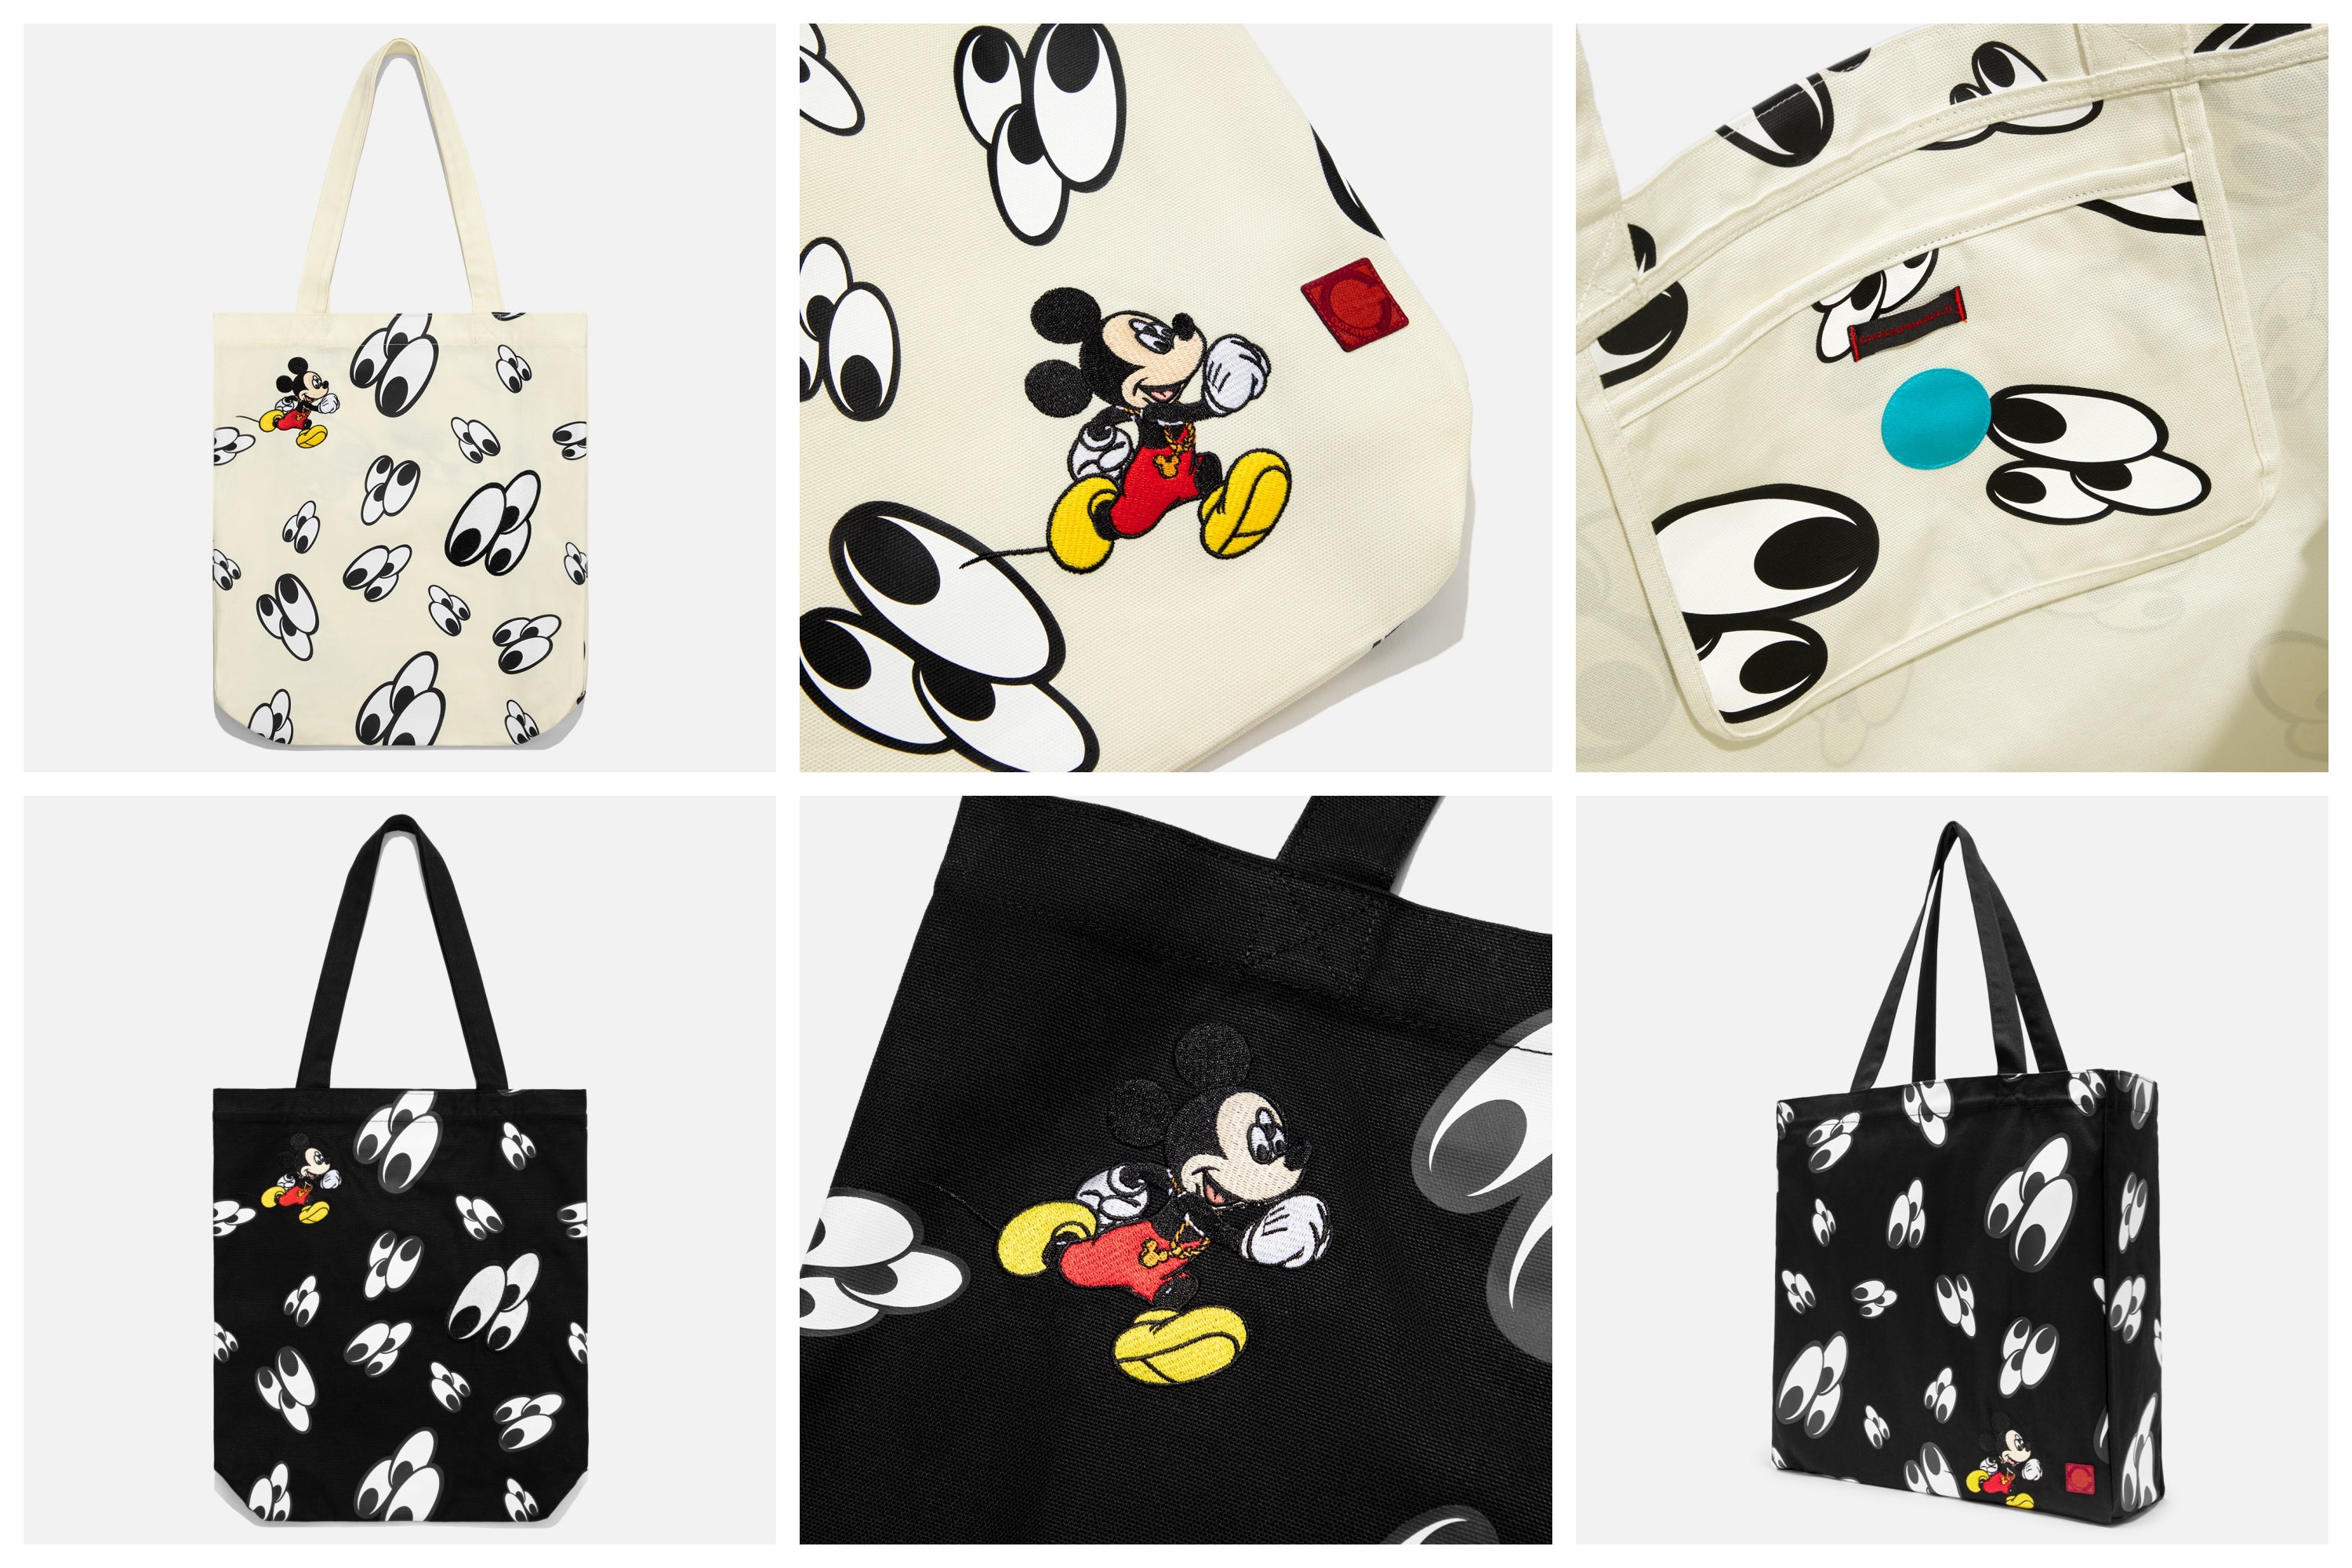 CLOT x Disney 3-Eyed Mickey tote bags